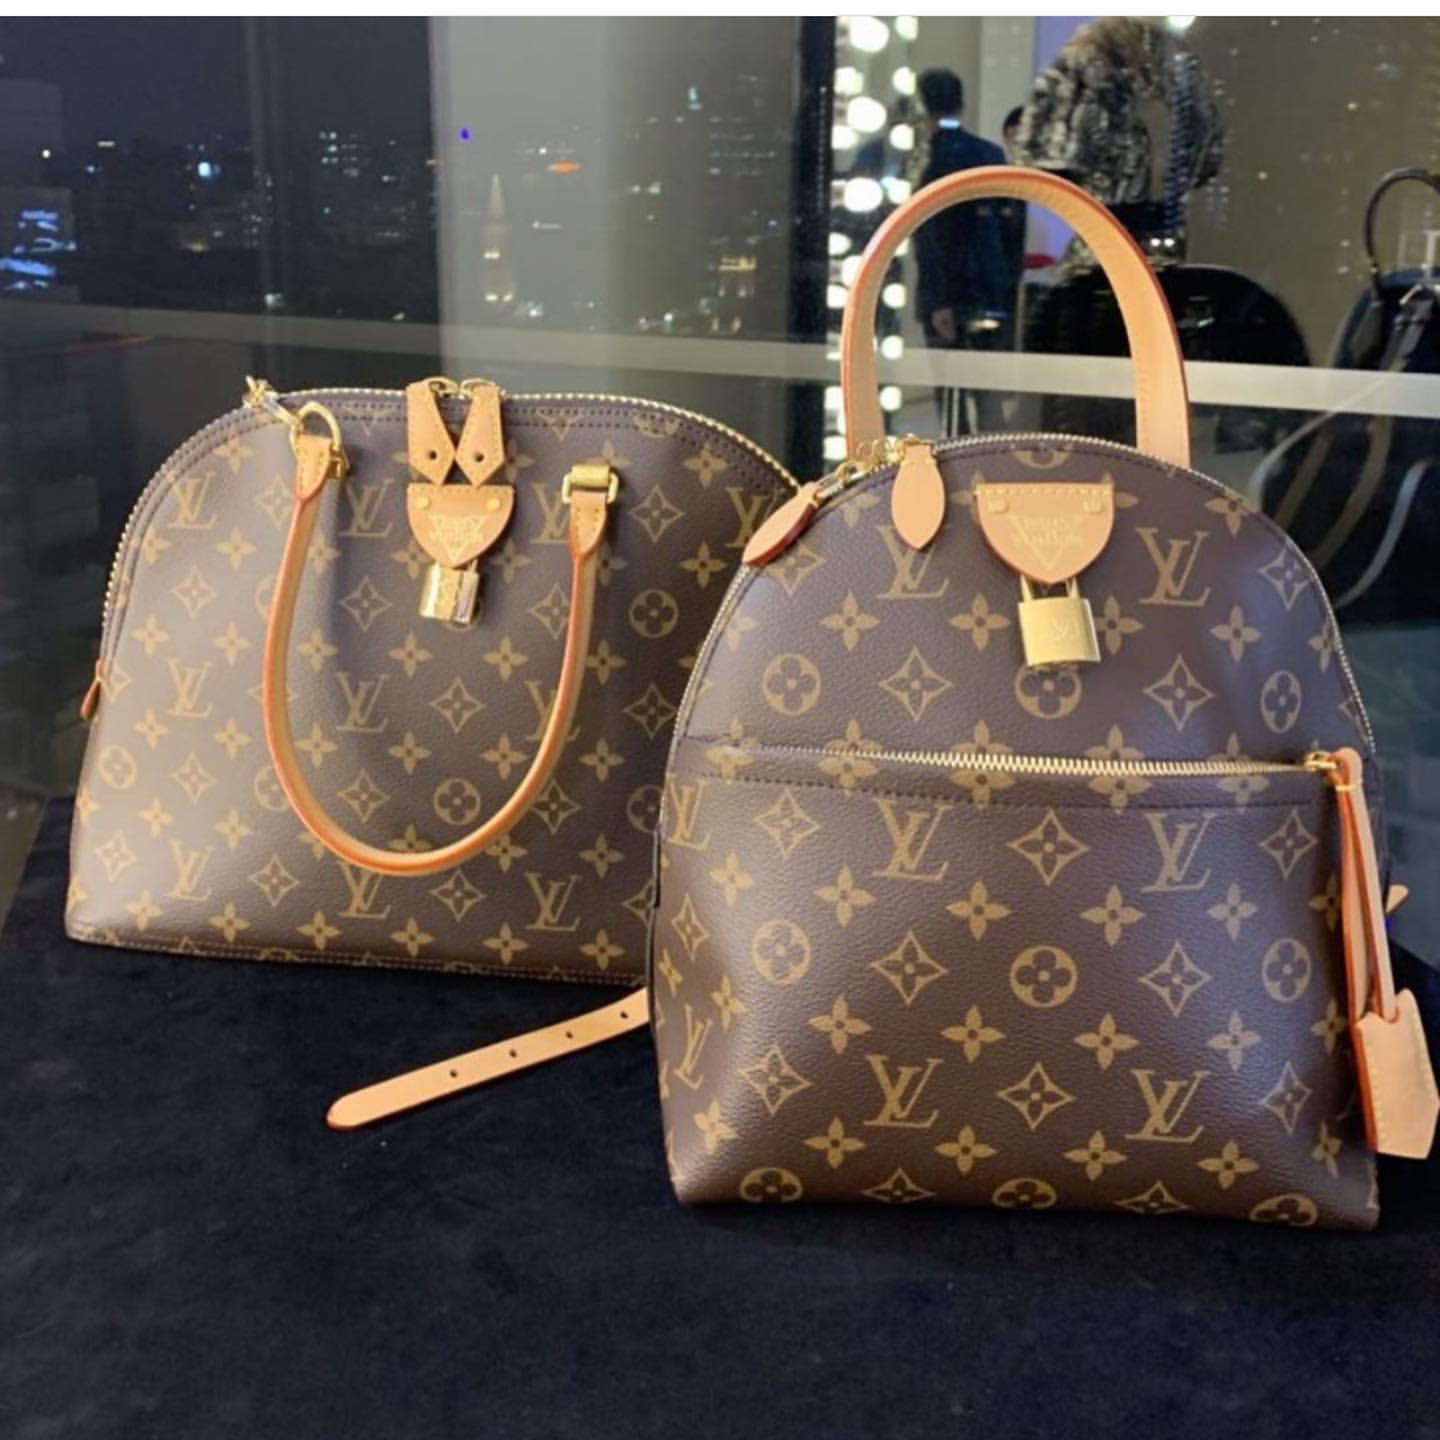 How quality handbags enhance your style